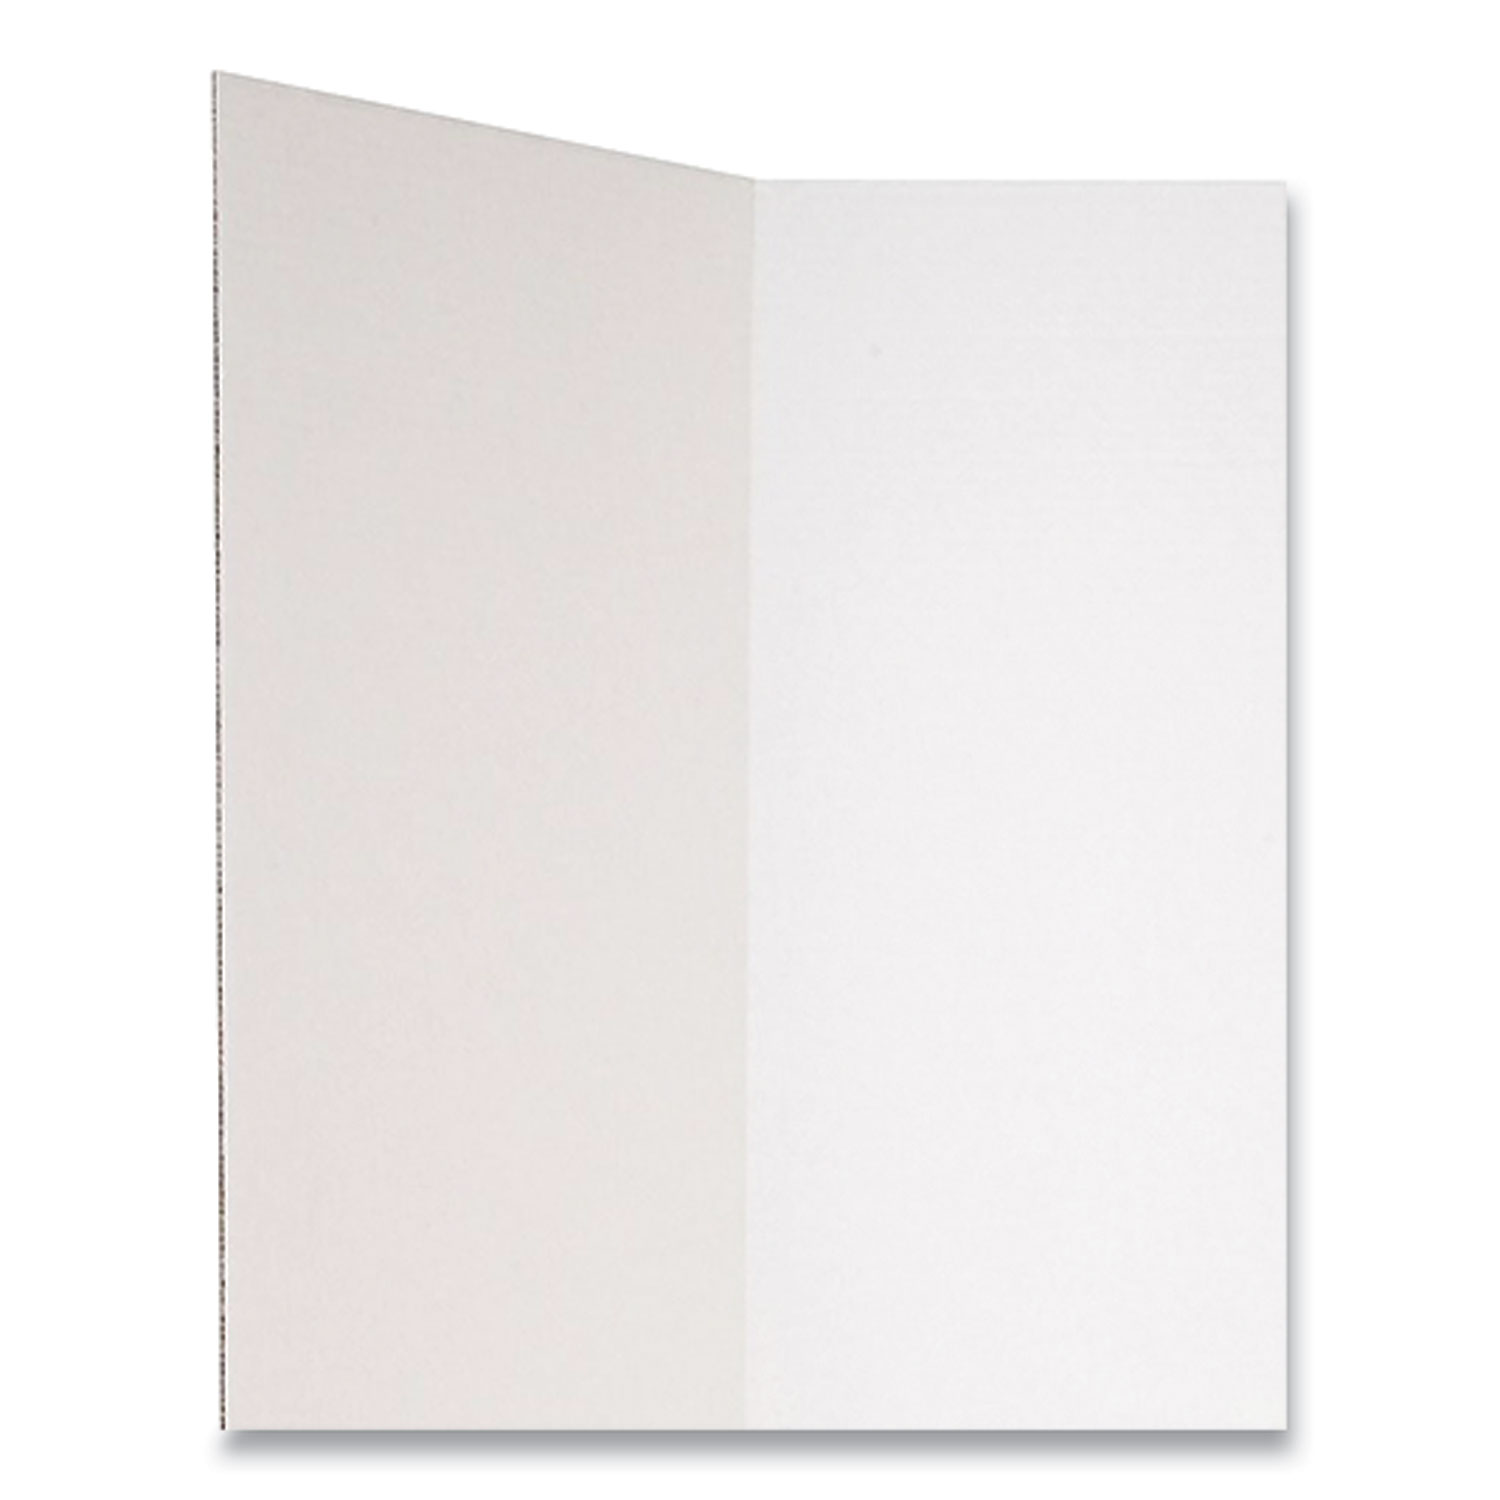  Elmer's 730190 Double-Ply Corrugated Presentation Board, 48 x 36, White (EPI302919) 